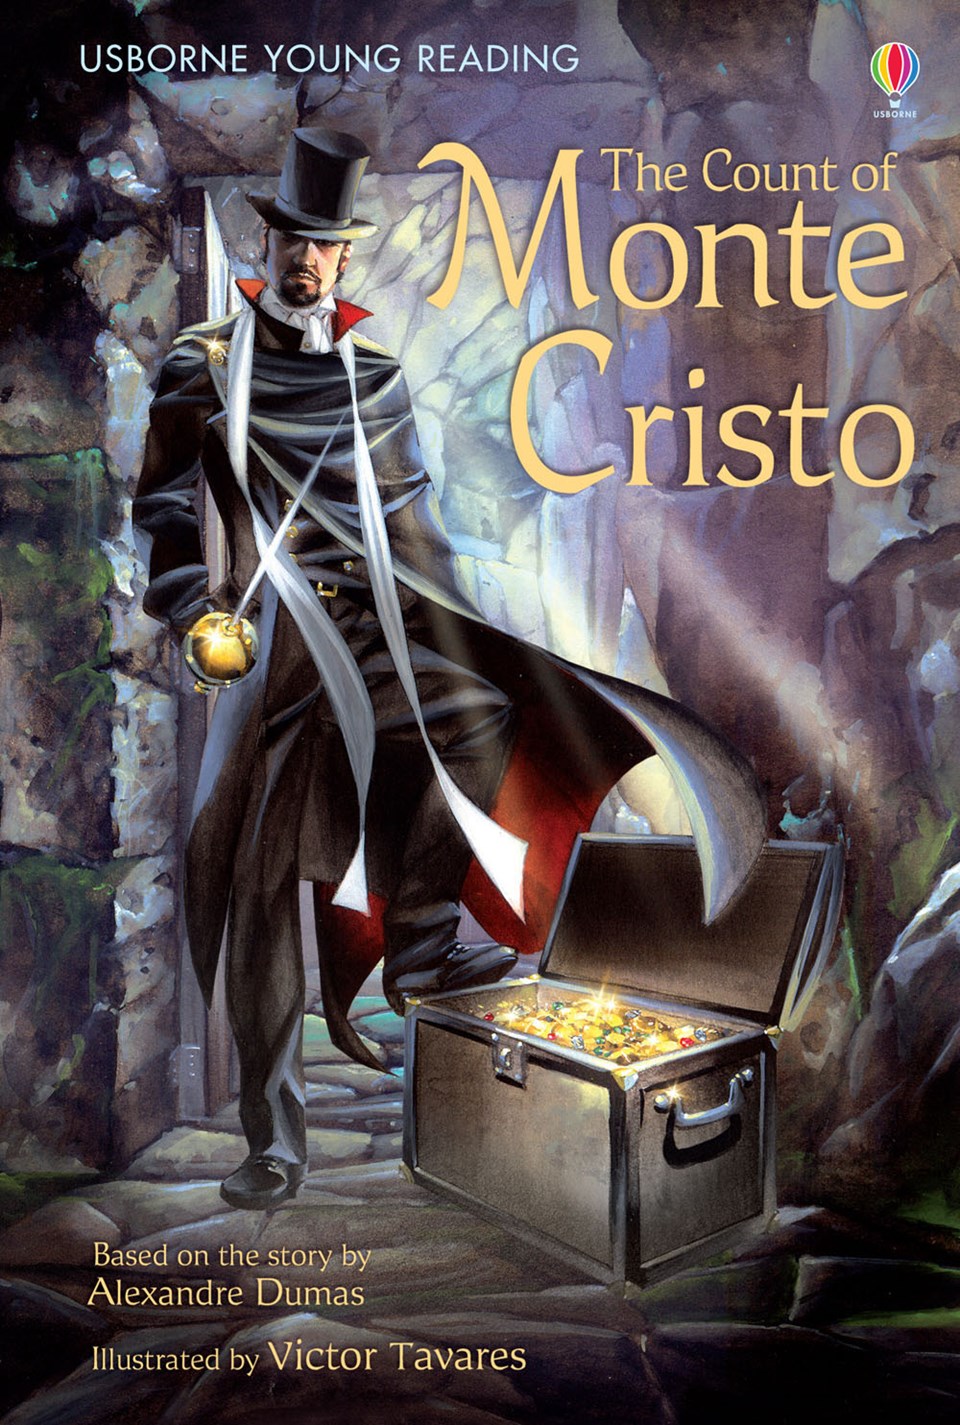 UYR 3 Count of Monte Cristo, The HB